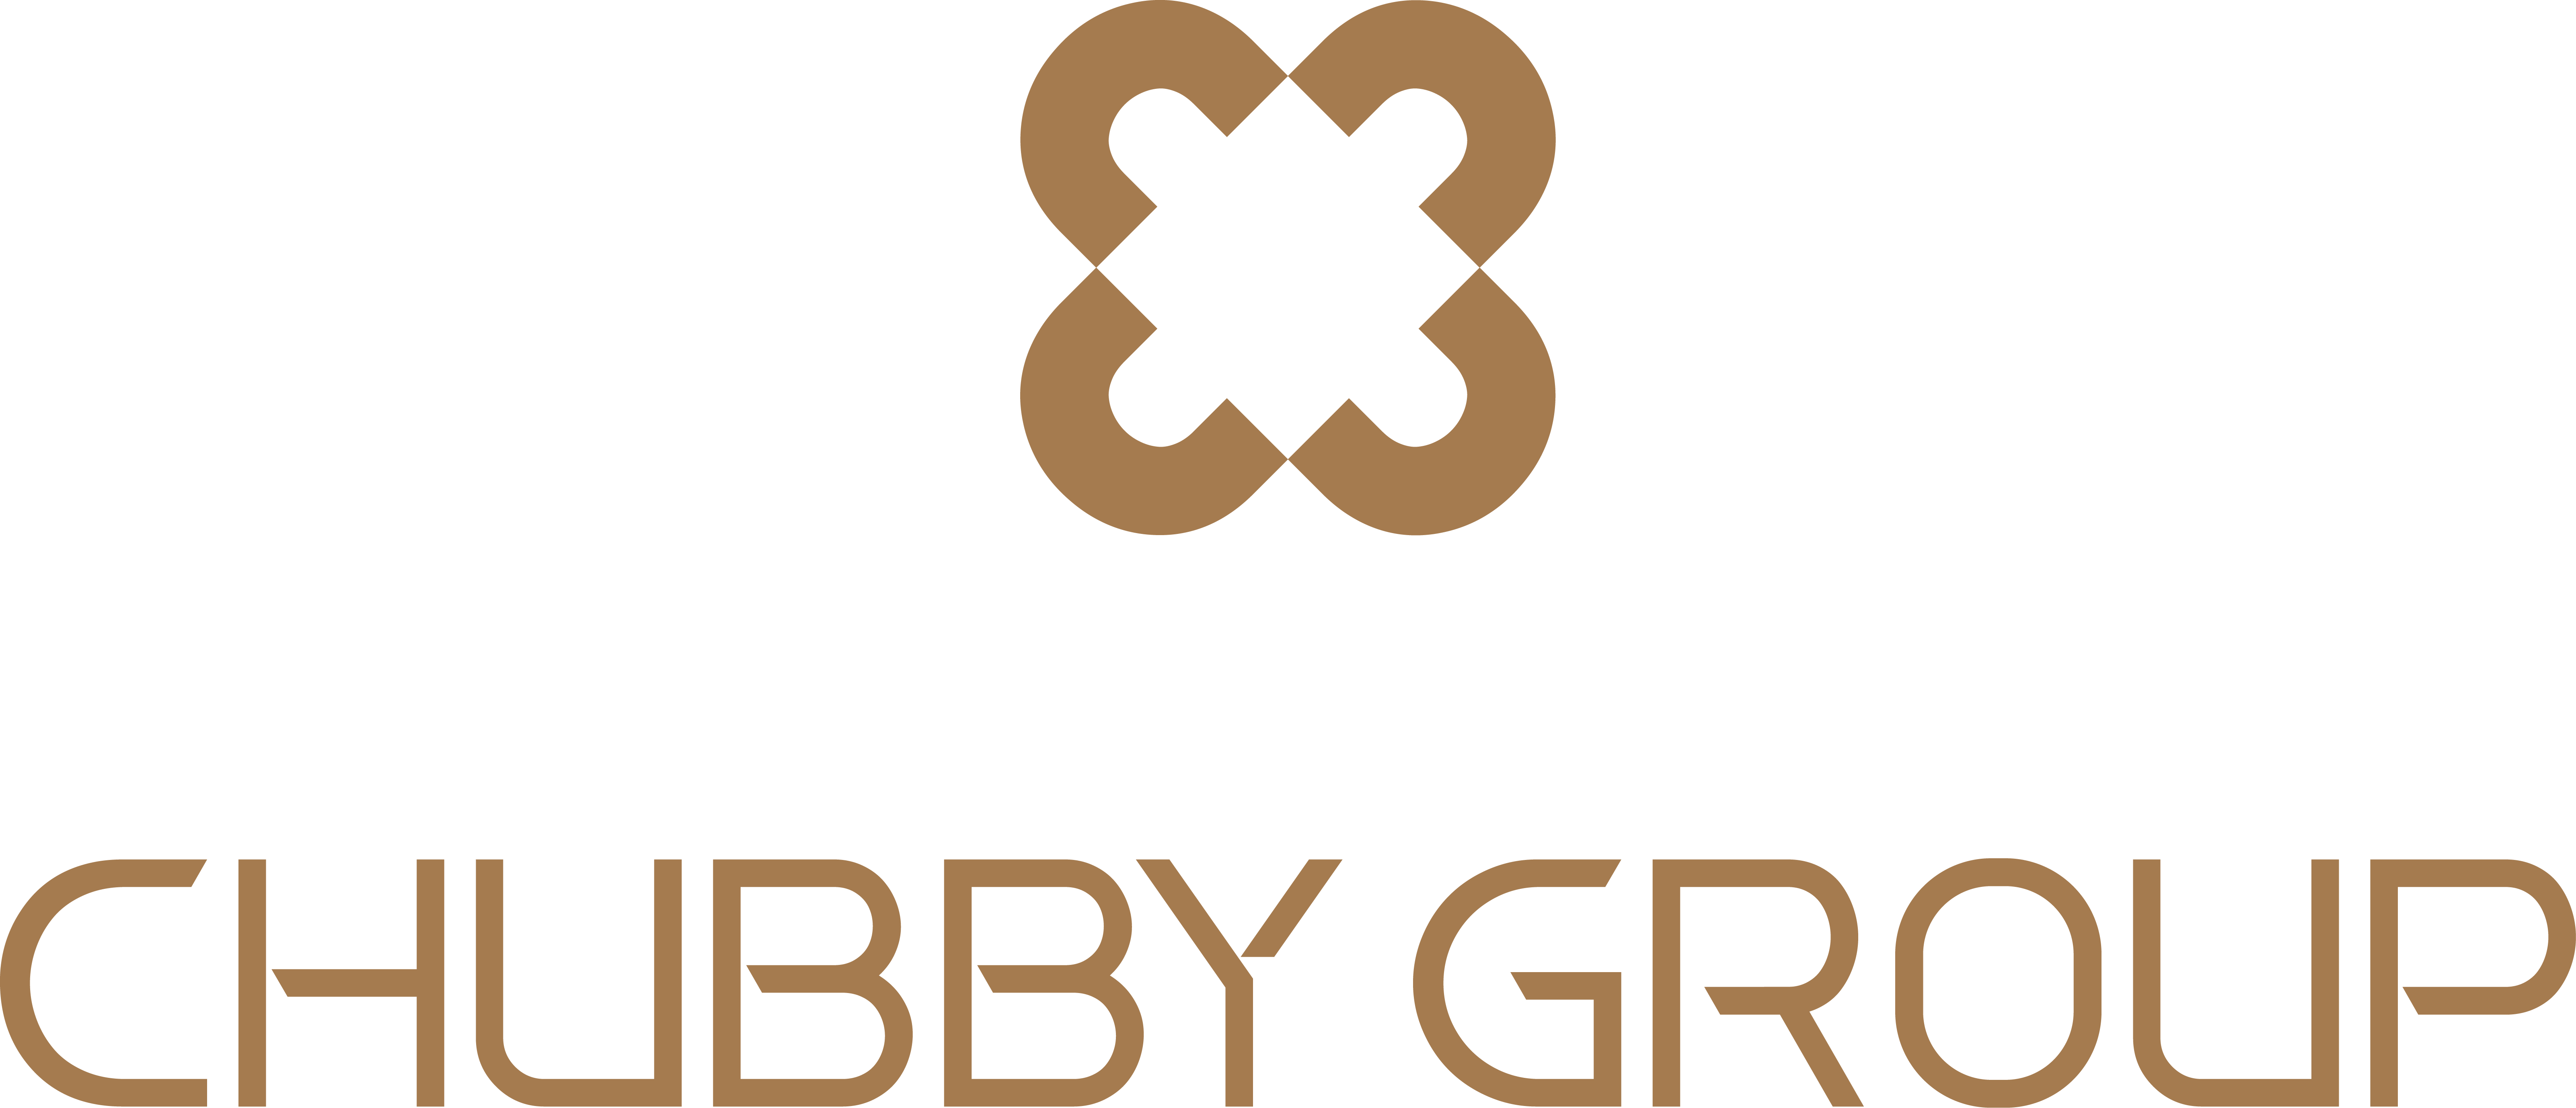 Chubby Group | Partnership